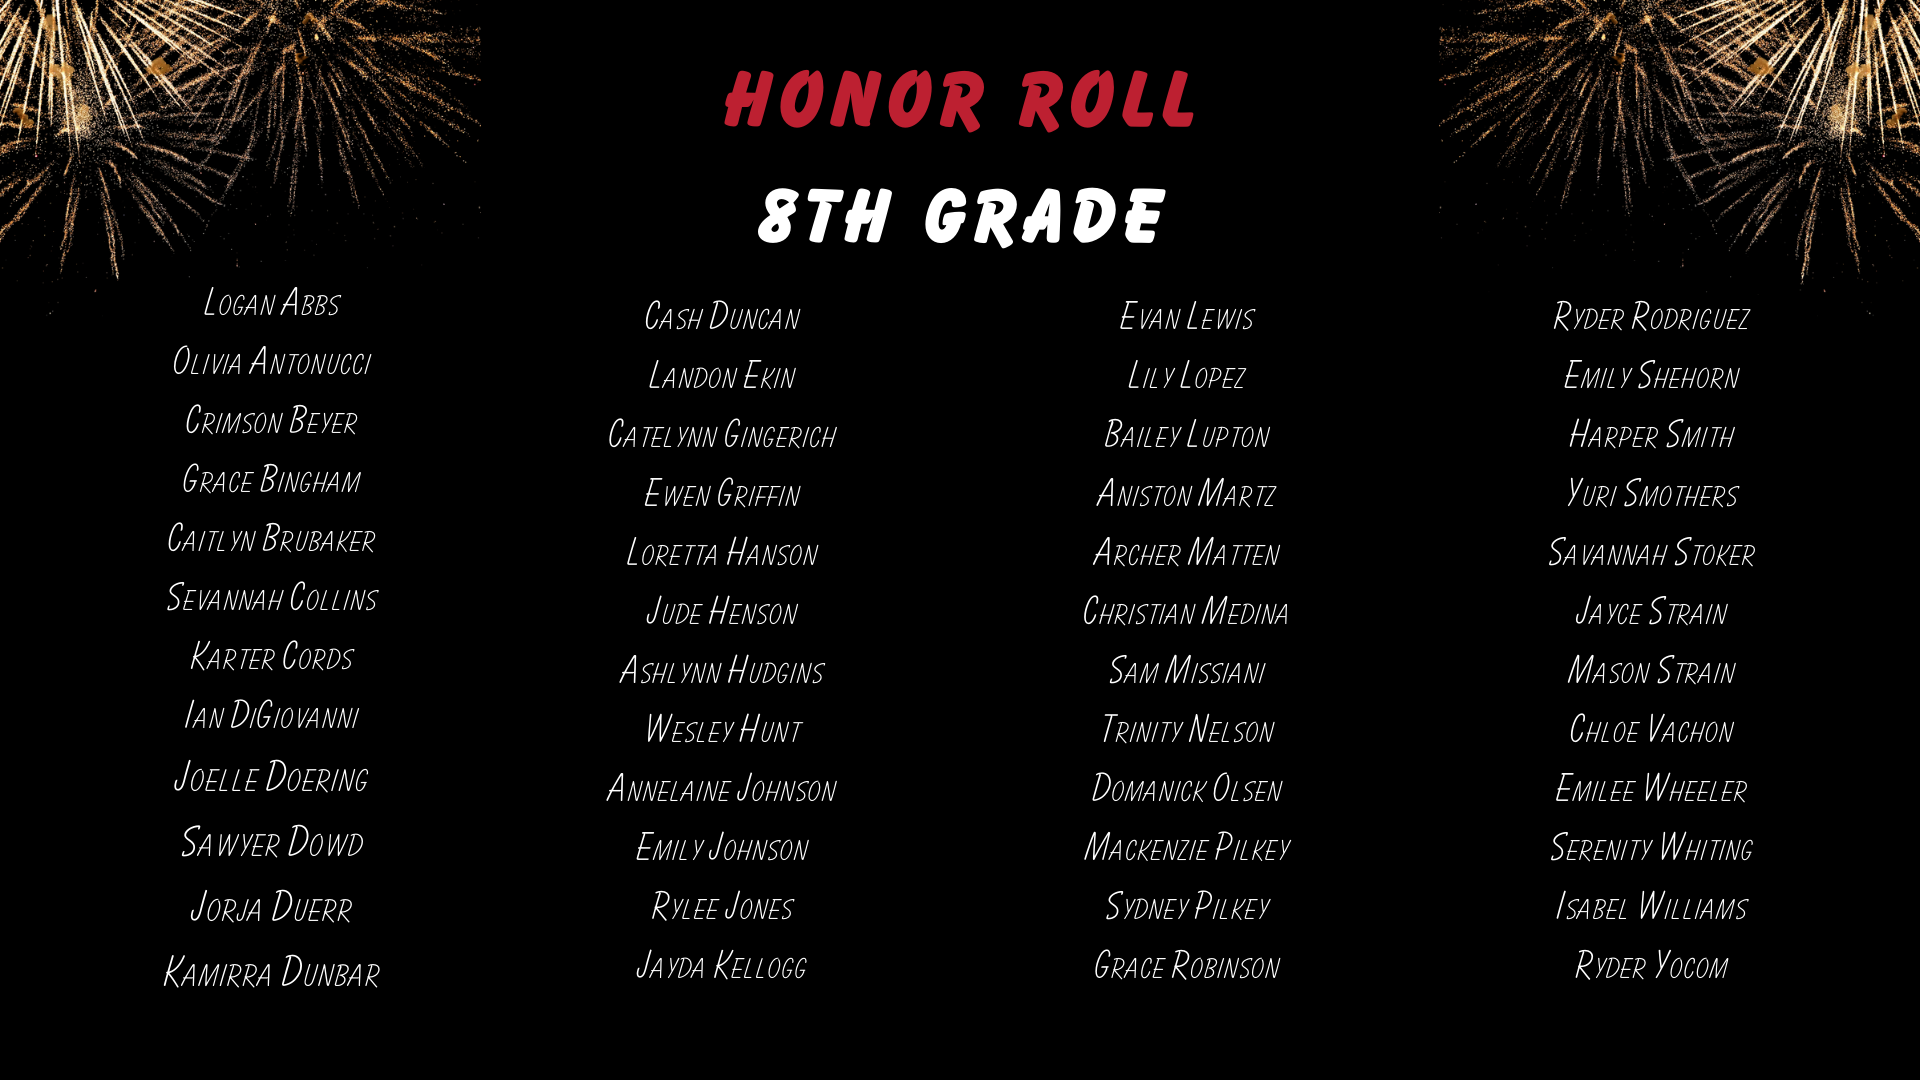 Honor Roll 8th grade